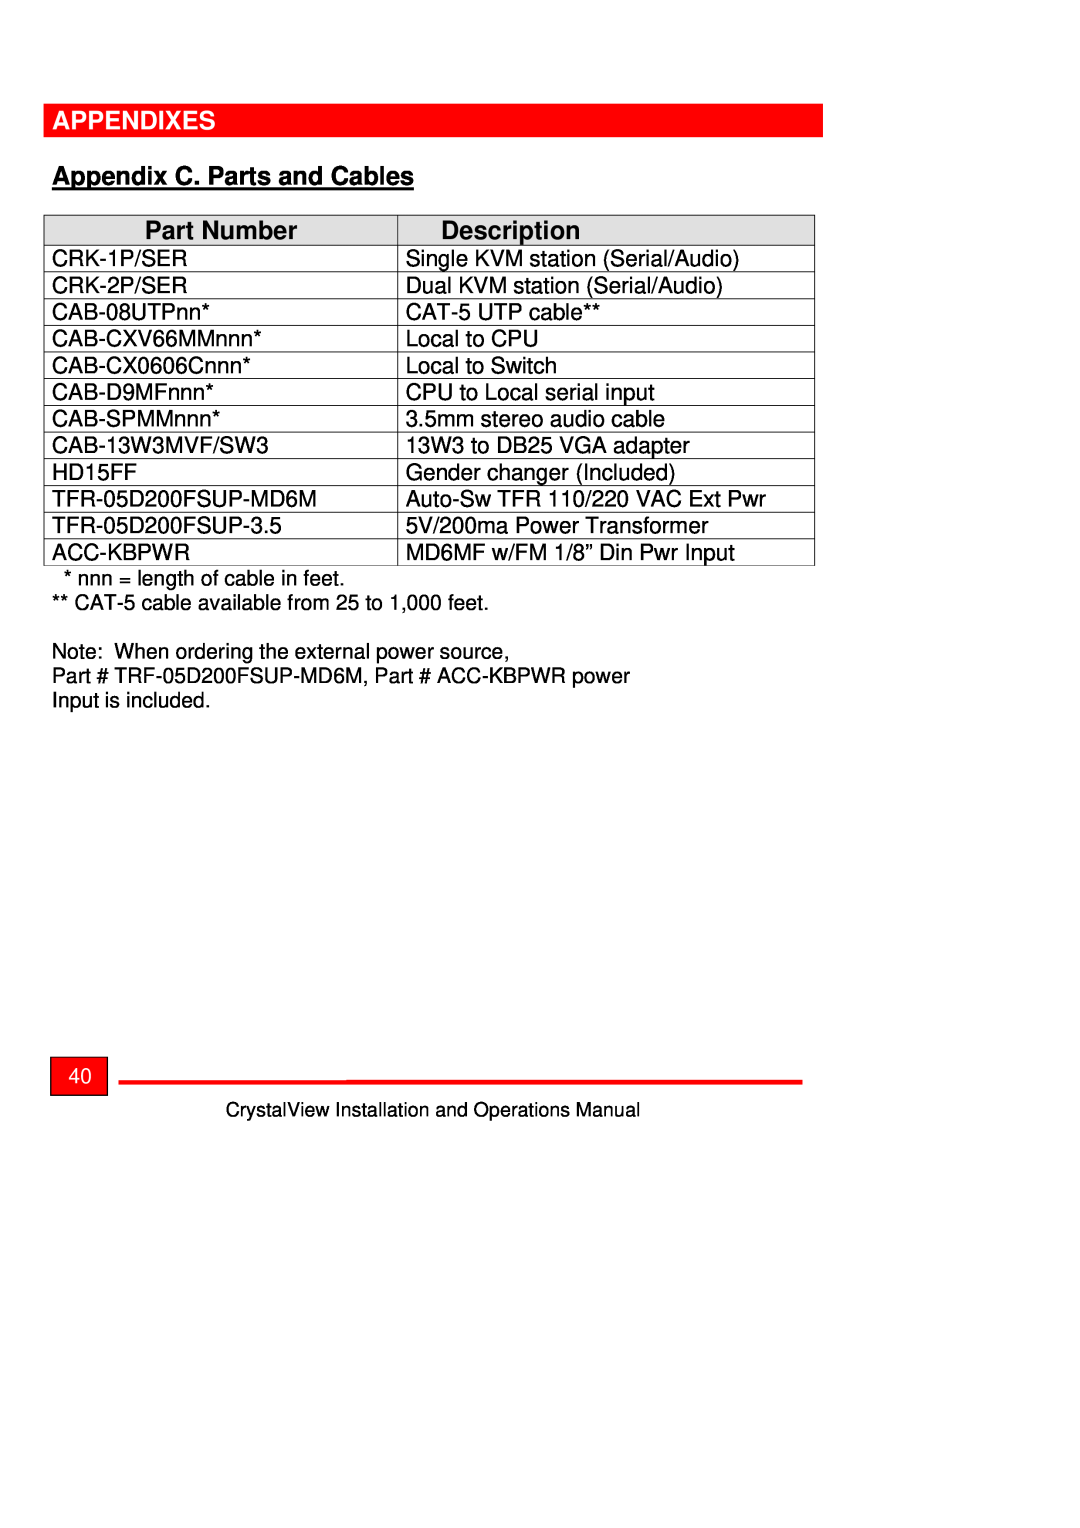 Rose electronic Crystal View operation manual Appendix C. Parts and Cables, Part Number, Description, Appendixes 